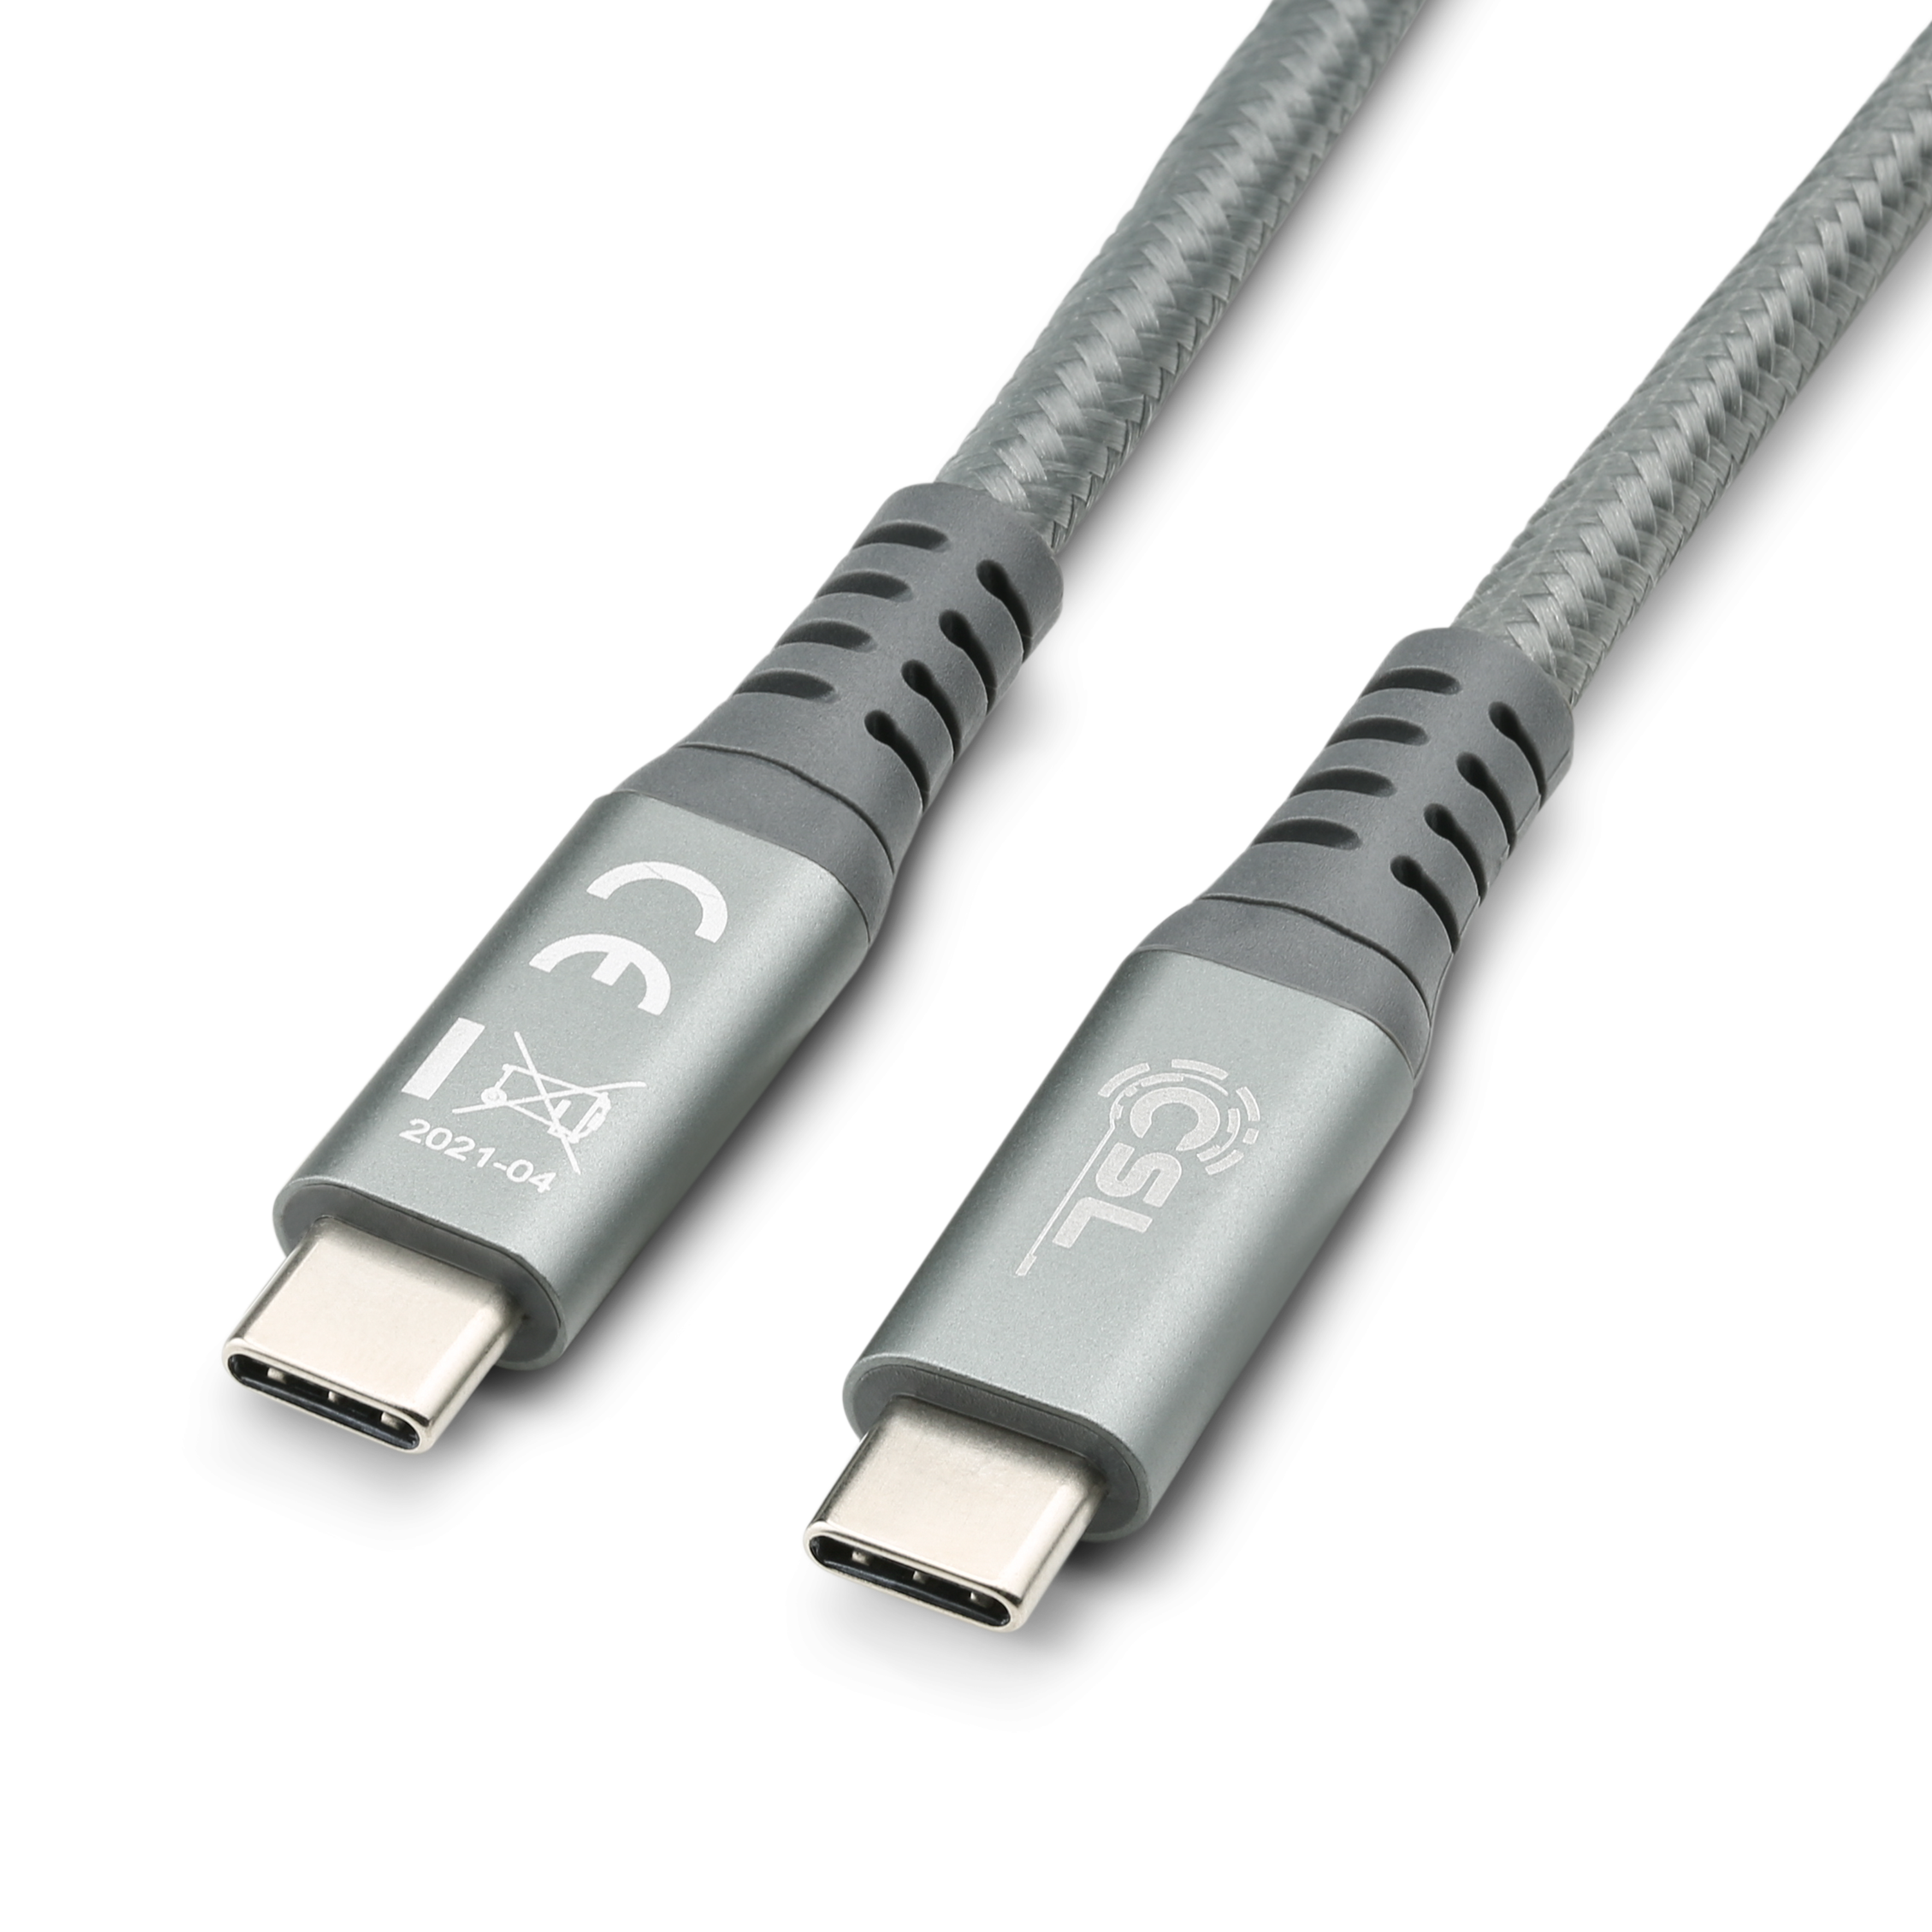 CSL - 1m câble de rallonge USB 3.2 GEN 1, Câble usb rallonge 1 mètre  extensible, Rallonge